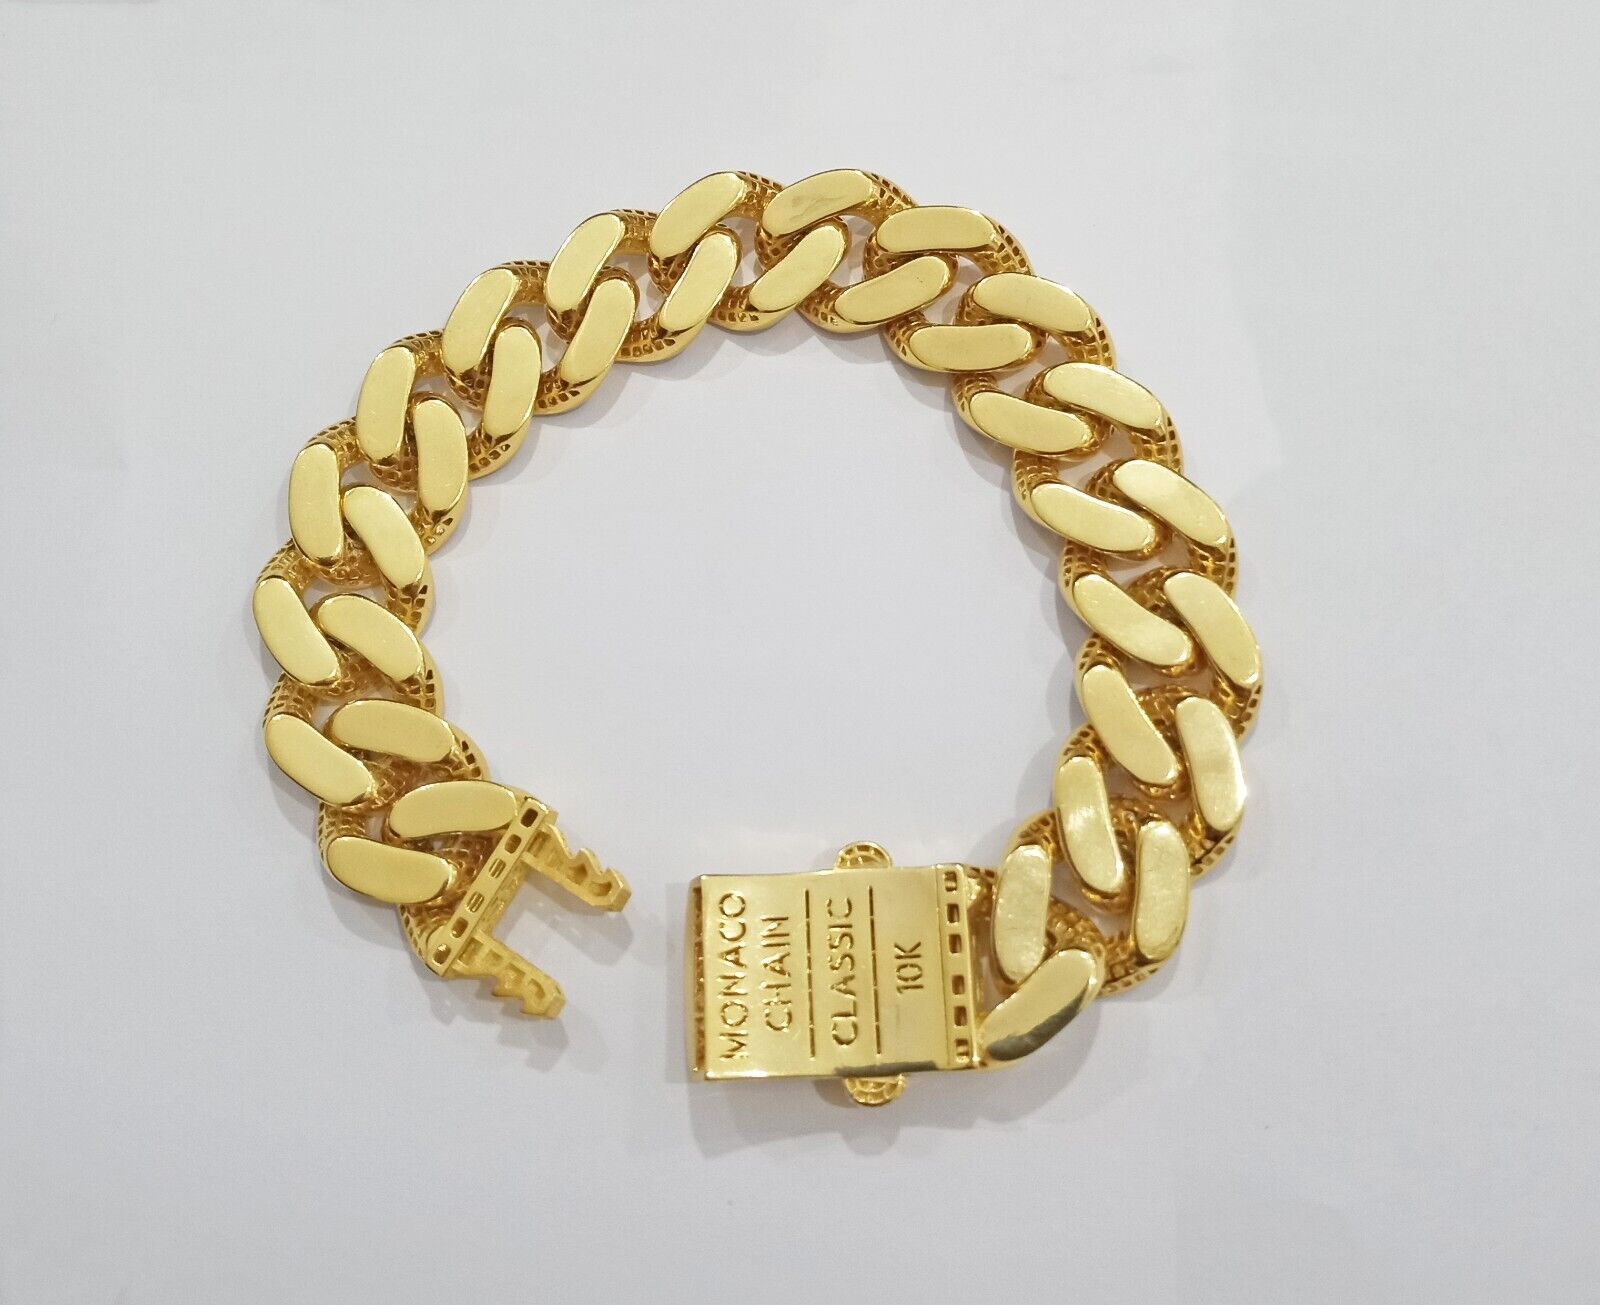 Real 10k Gold Monaco Bracelet 17mm 9